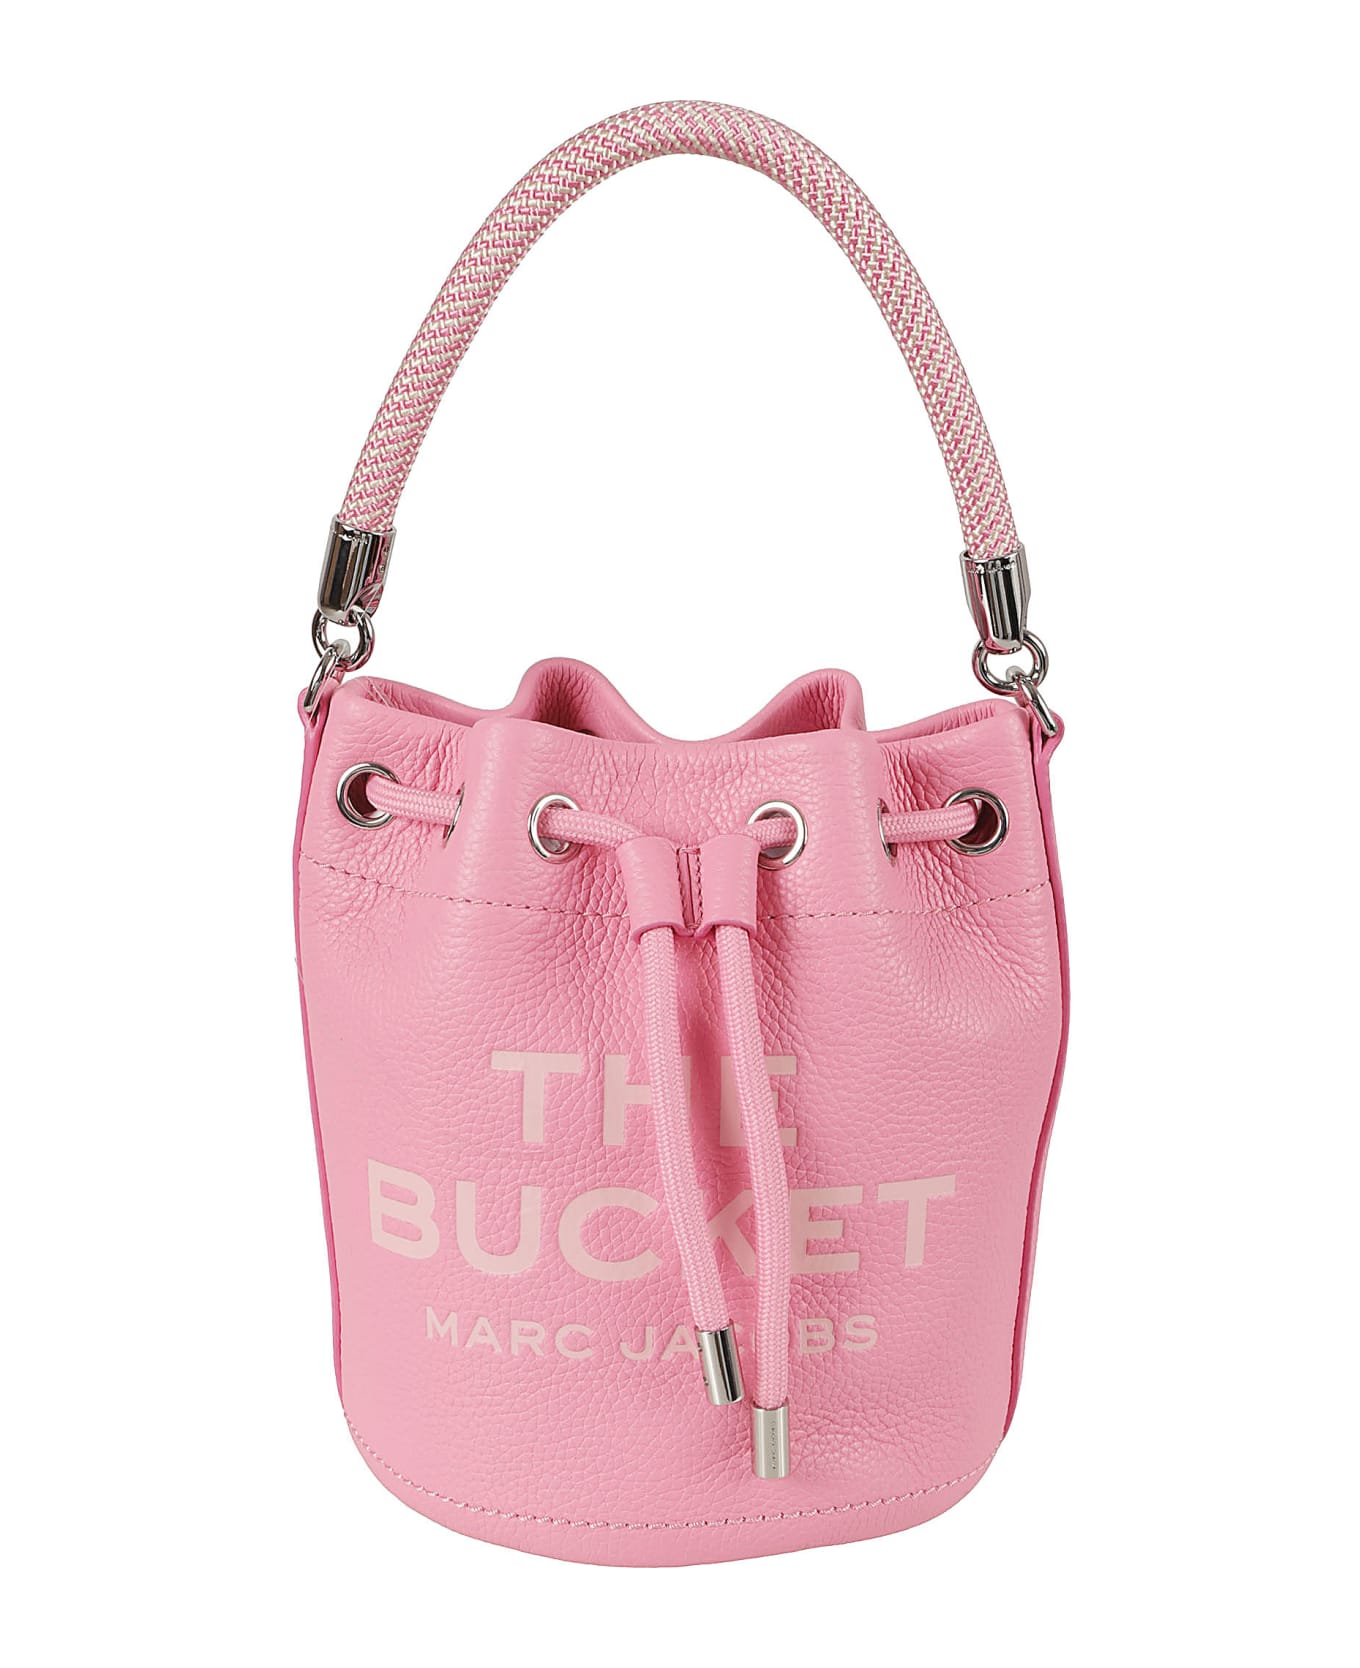 Marc Jacobs The Bucket Bag - PETAL PINK